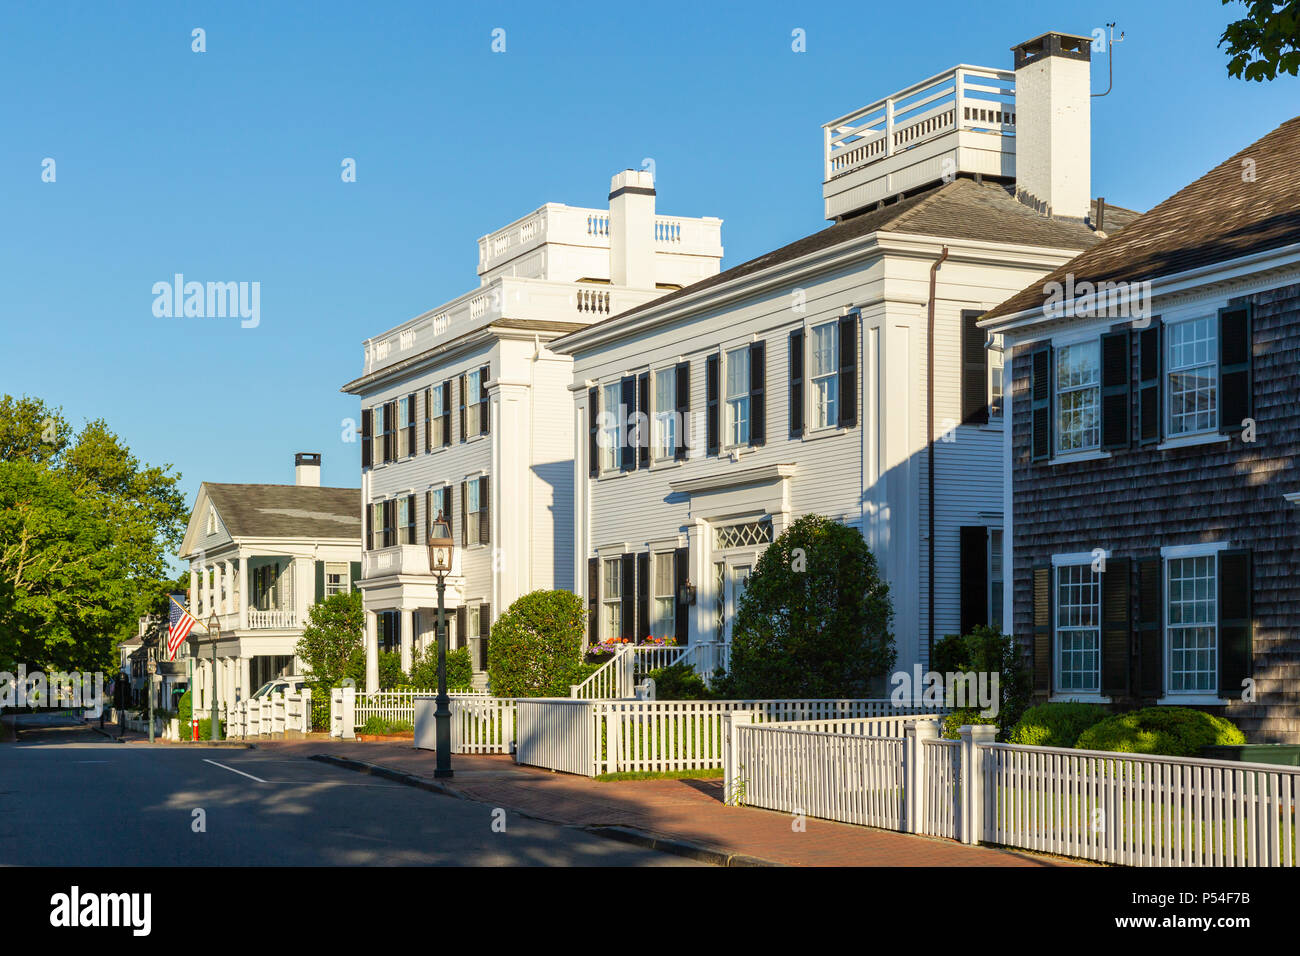 Stately white clapboard sea captains' homes along N Water Street in Edgartown, Massachusetts on Martha's Vineyard. Stock Photo